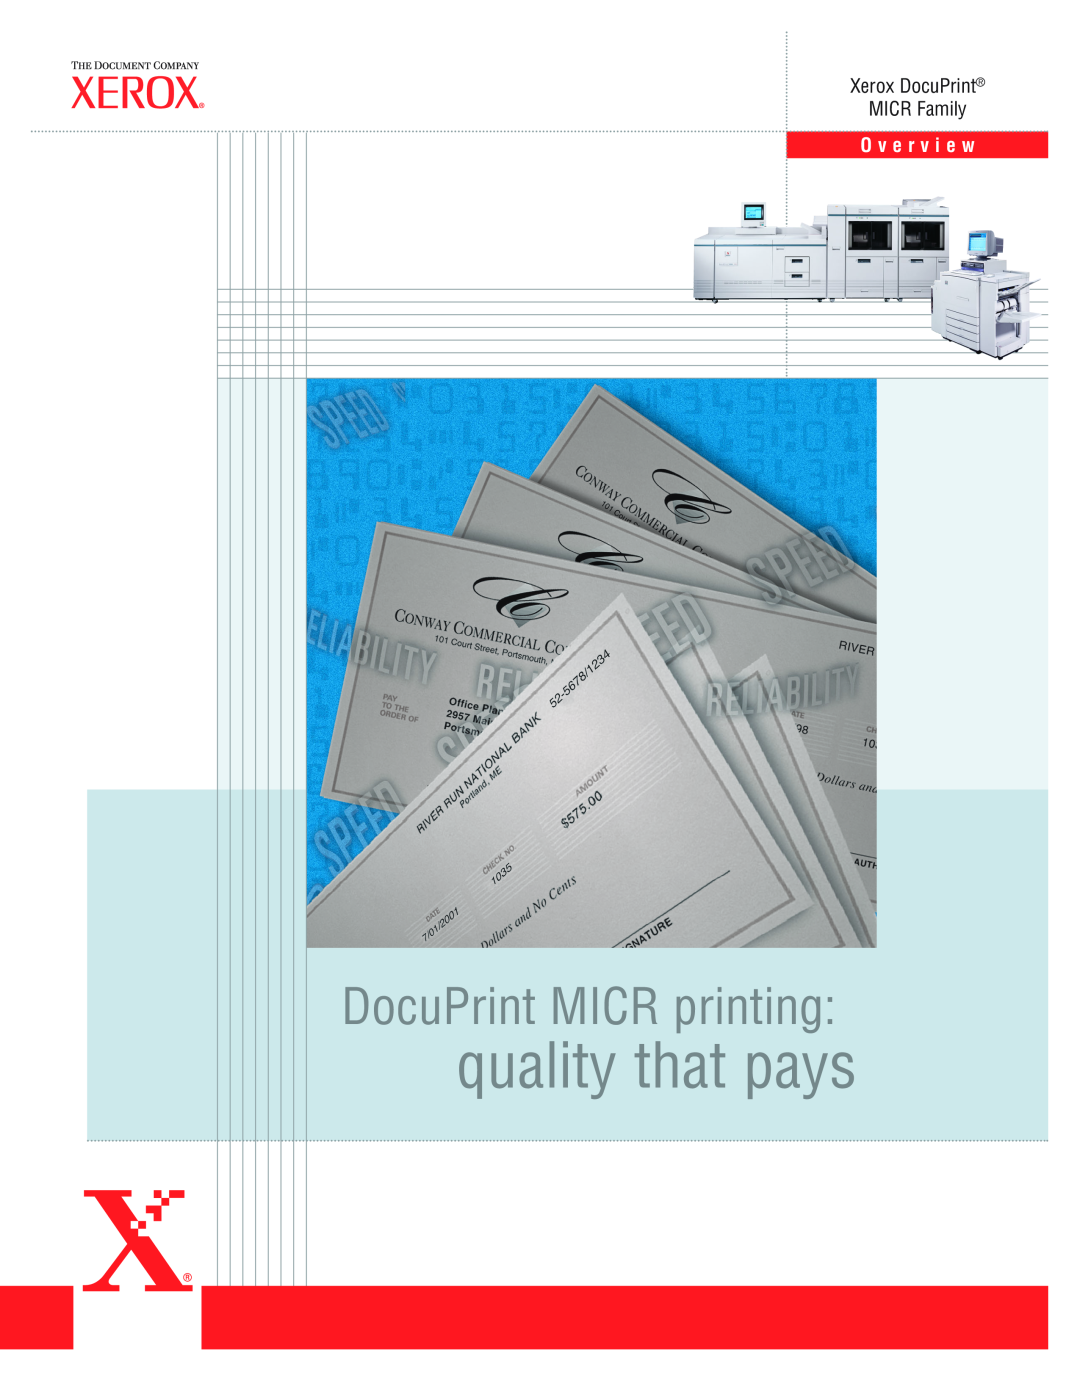 Xerox 4635MX, 2000MX manual quality that pays, DocuPrint MICR printing, Xerox DocuPrint MICR Family, O v e r v i e w 